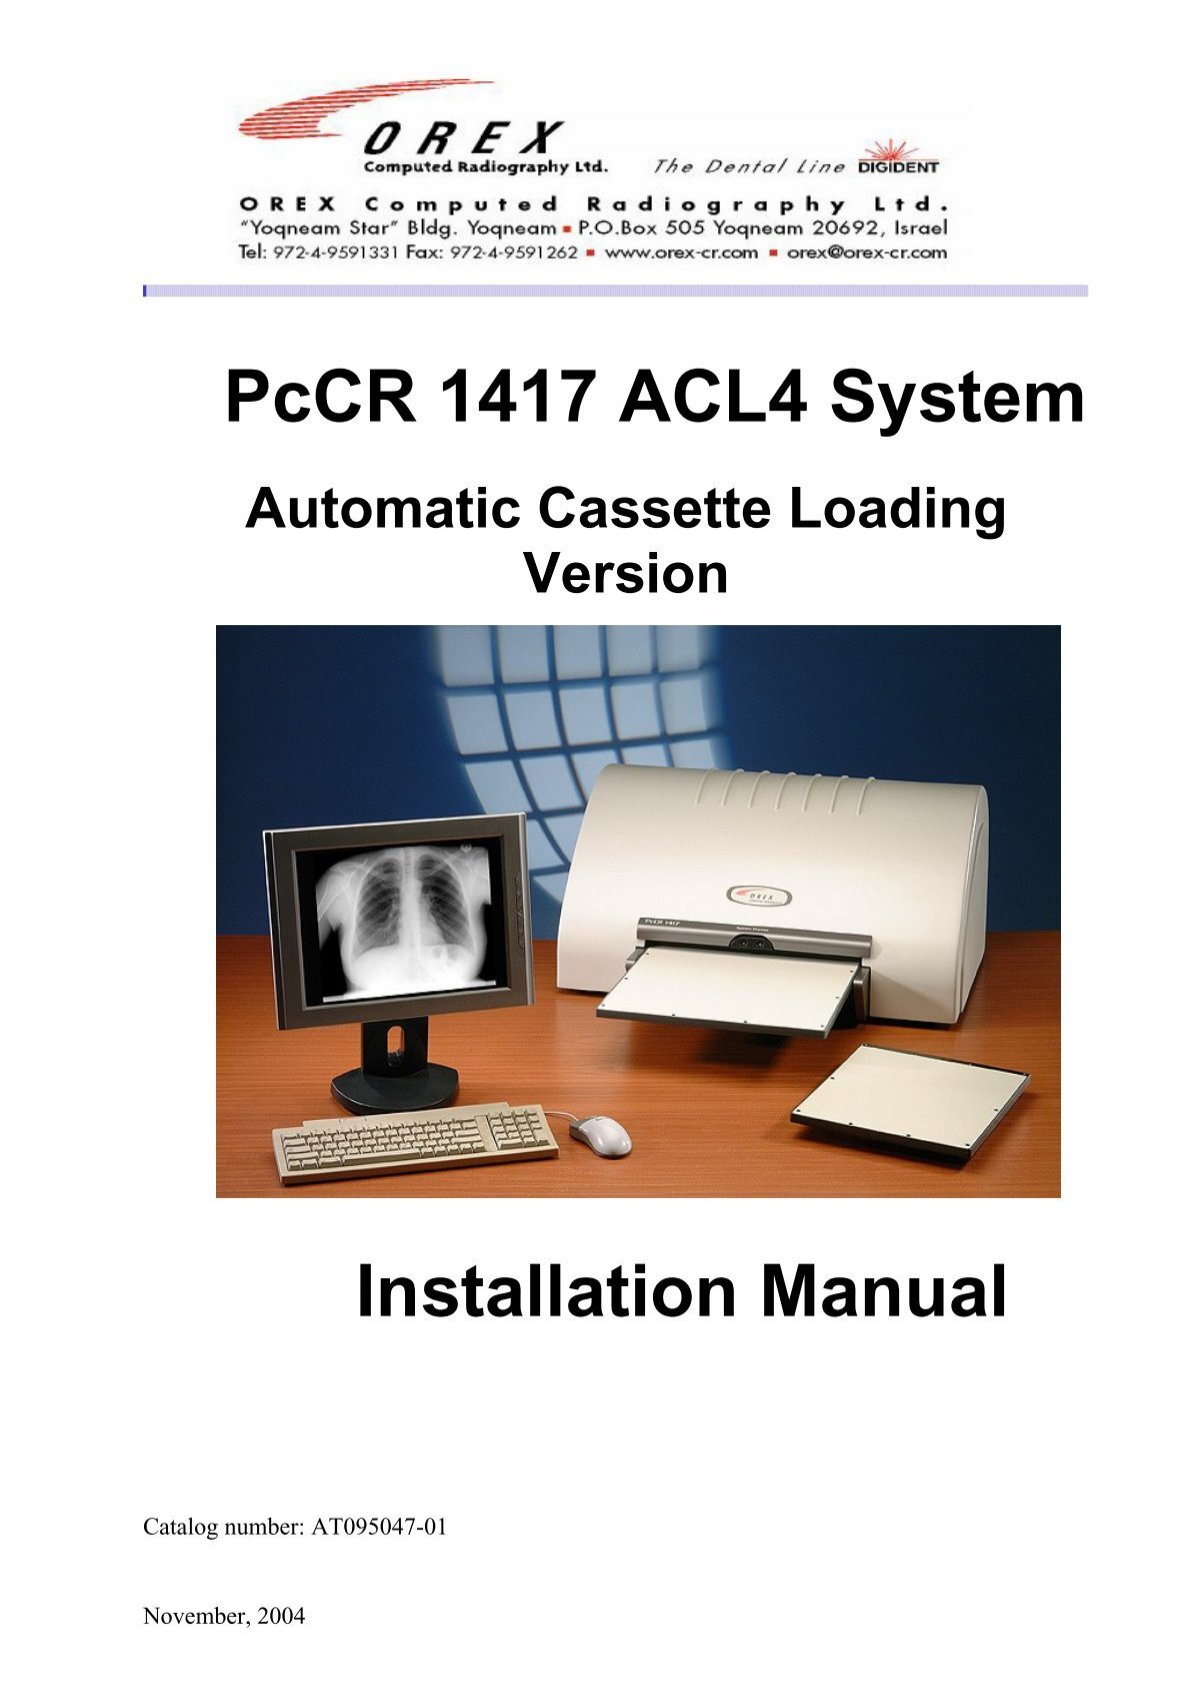 PcCR 1417 ACL4 System - Digital